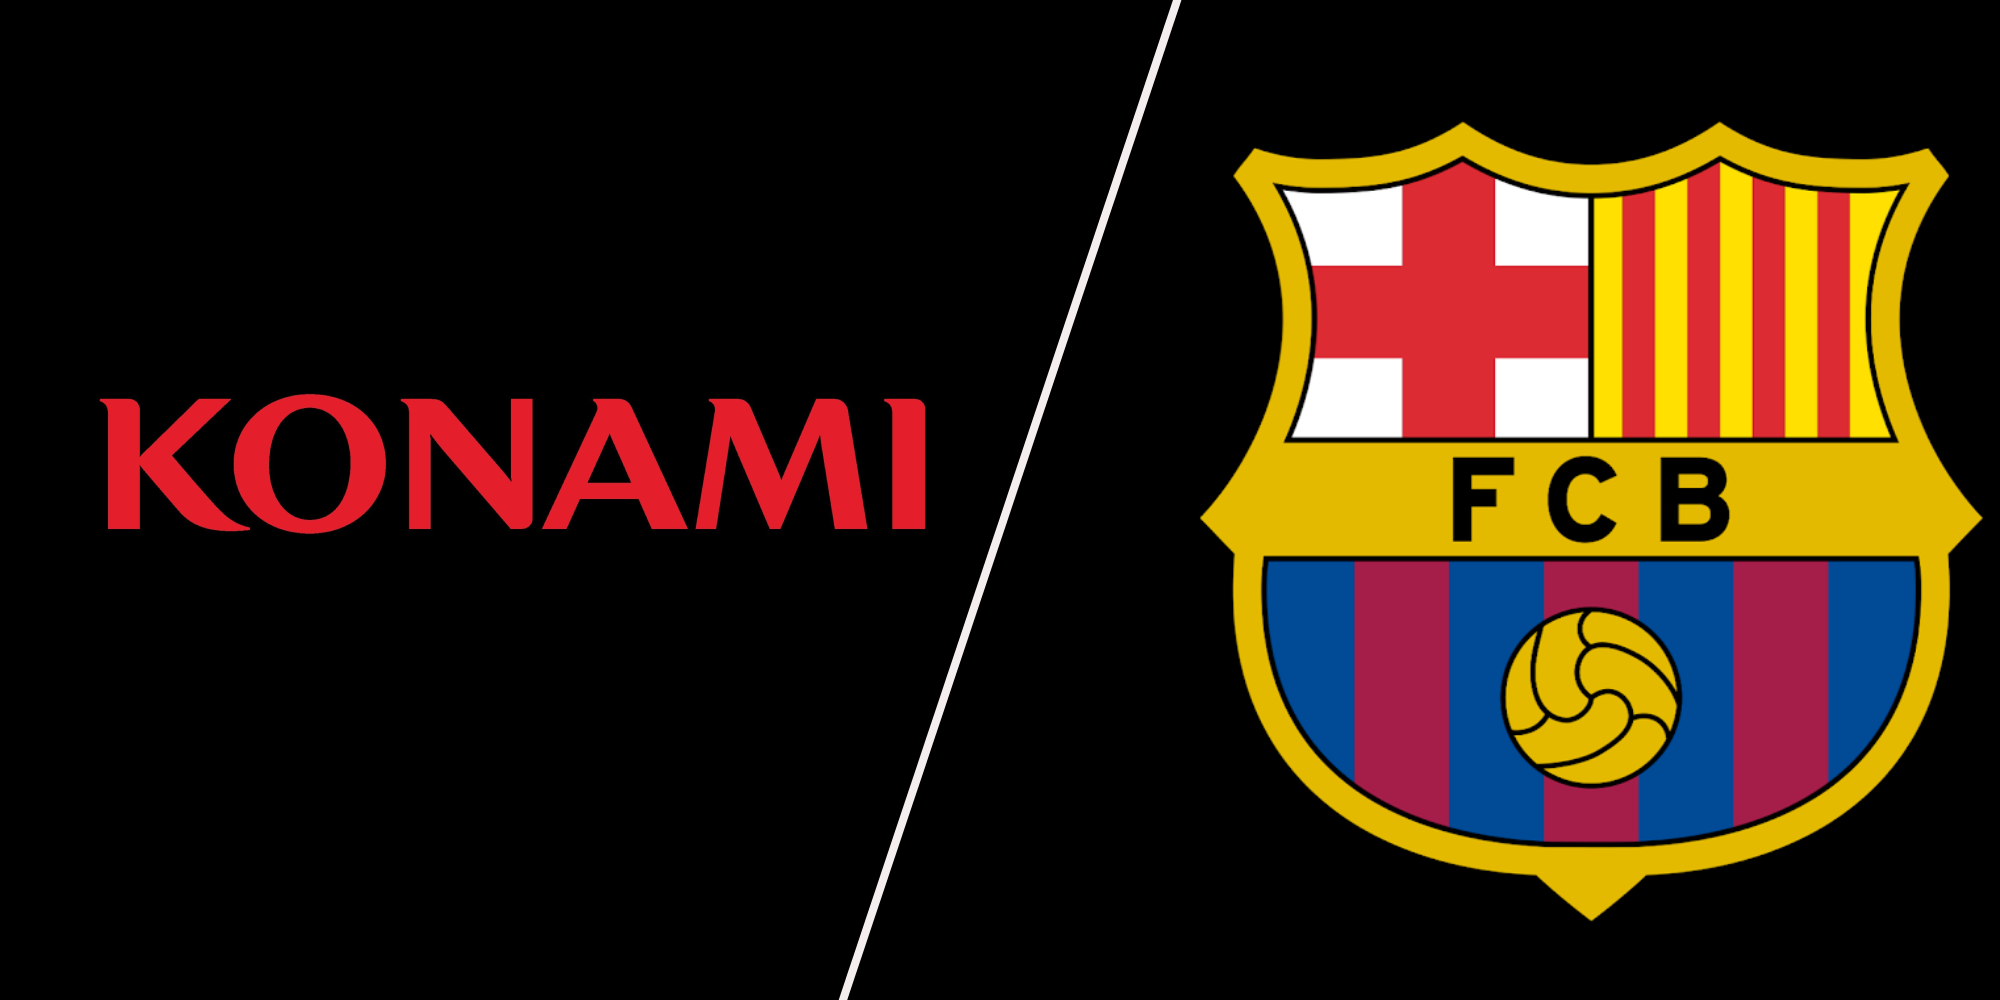 the logo of Konami and FC Barcelona